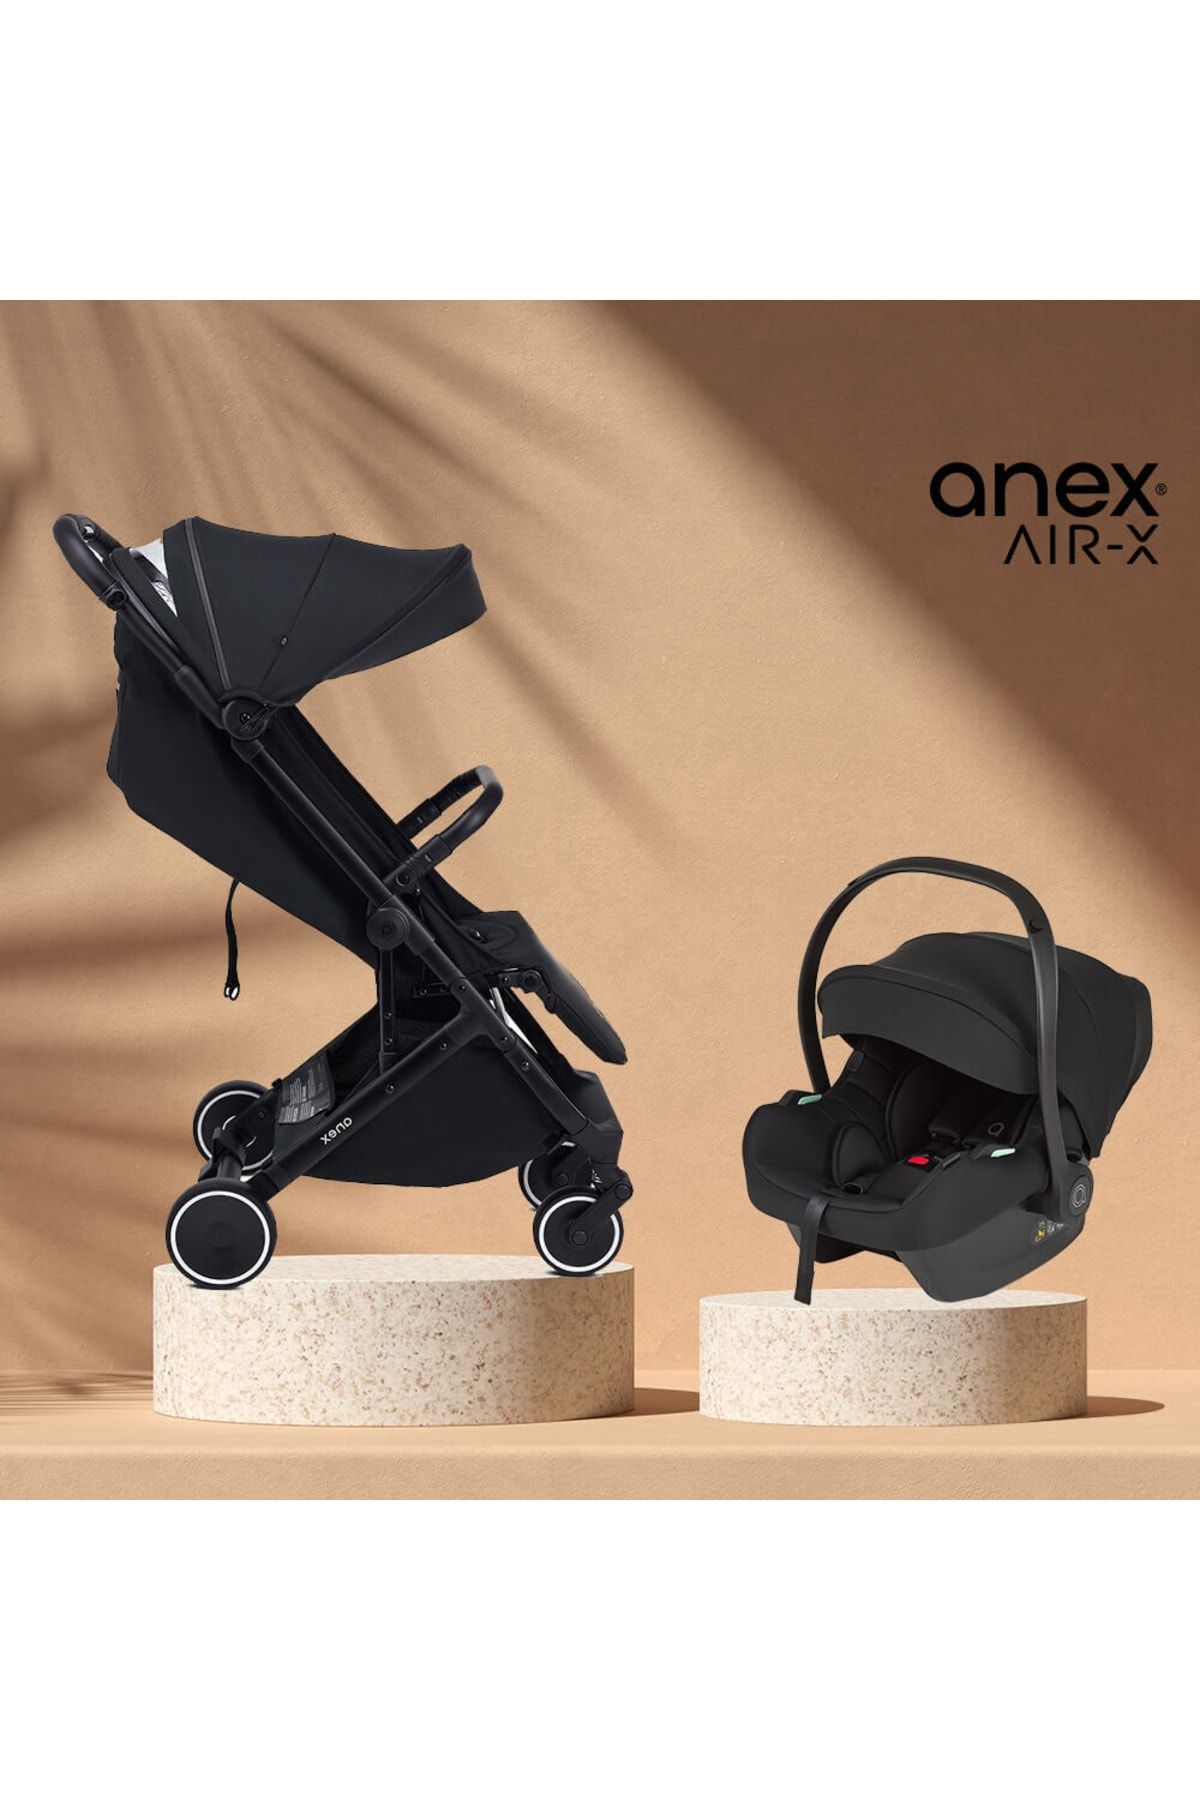 Anex ® Air-x Travel Set - Siyah-kabin Boy Bebek Arabası